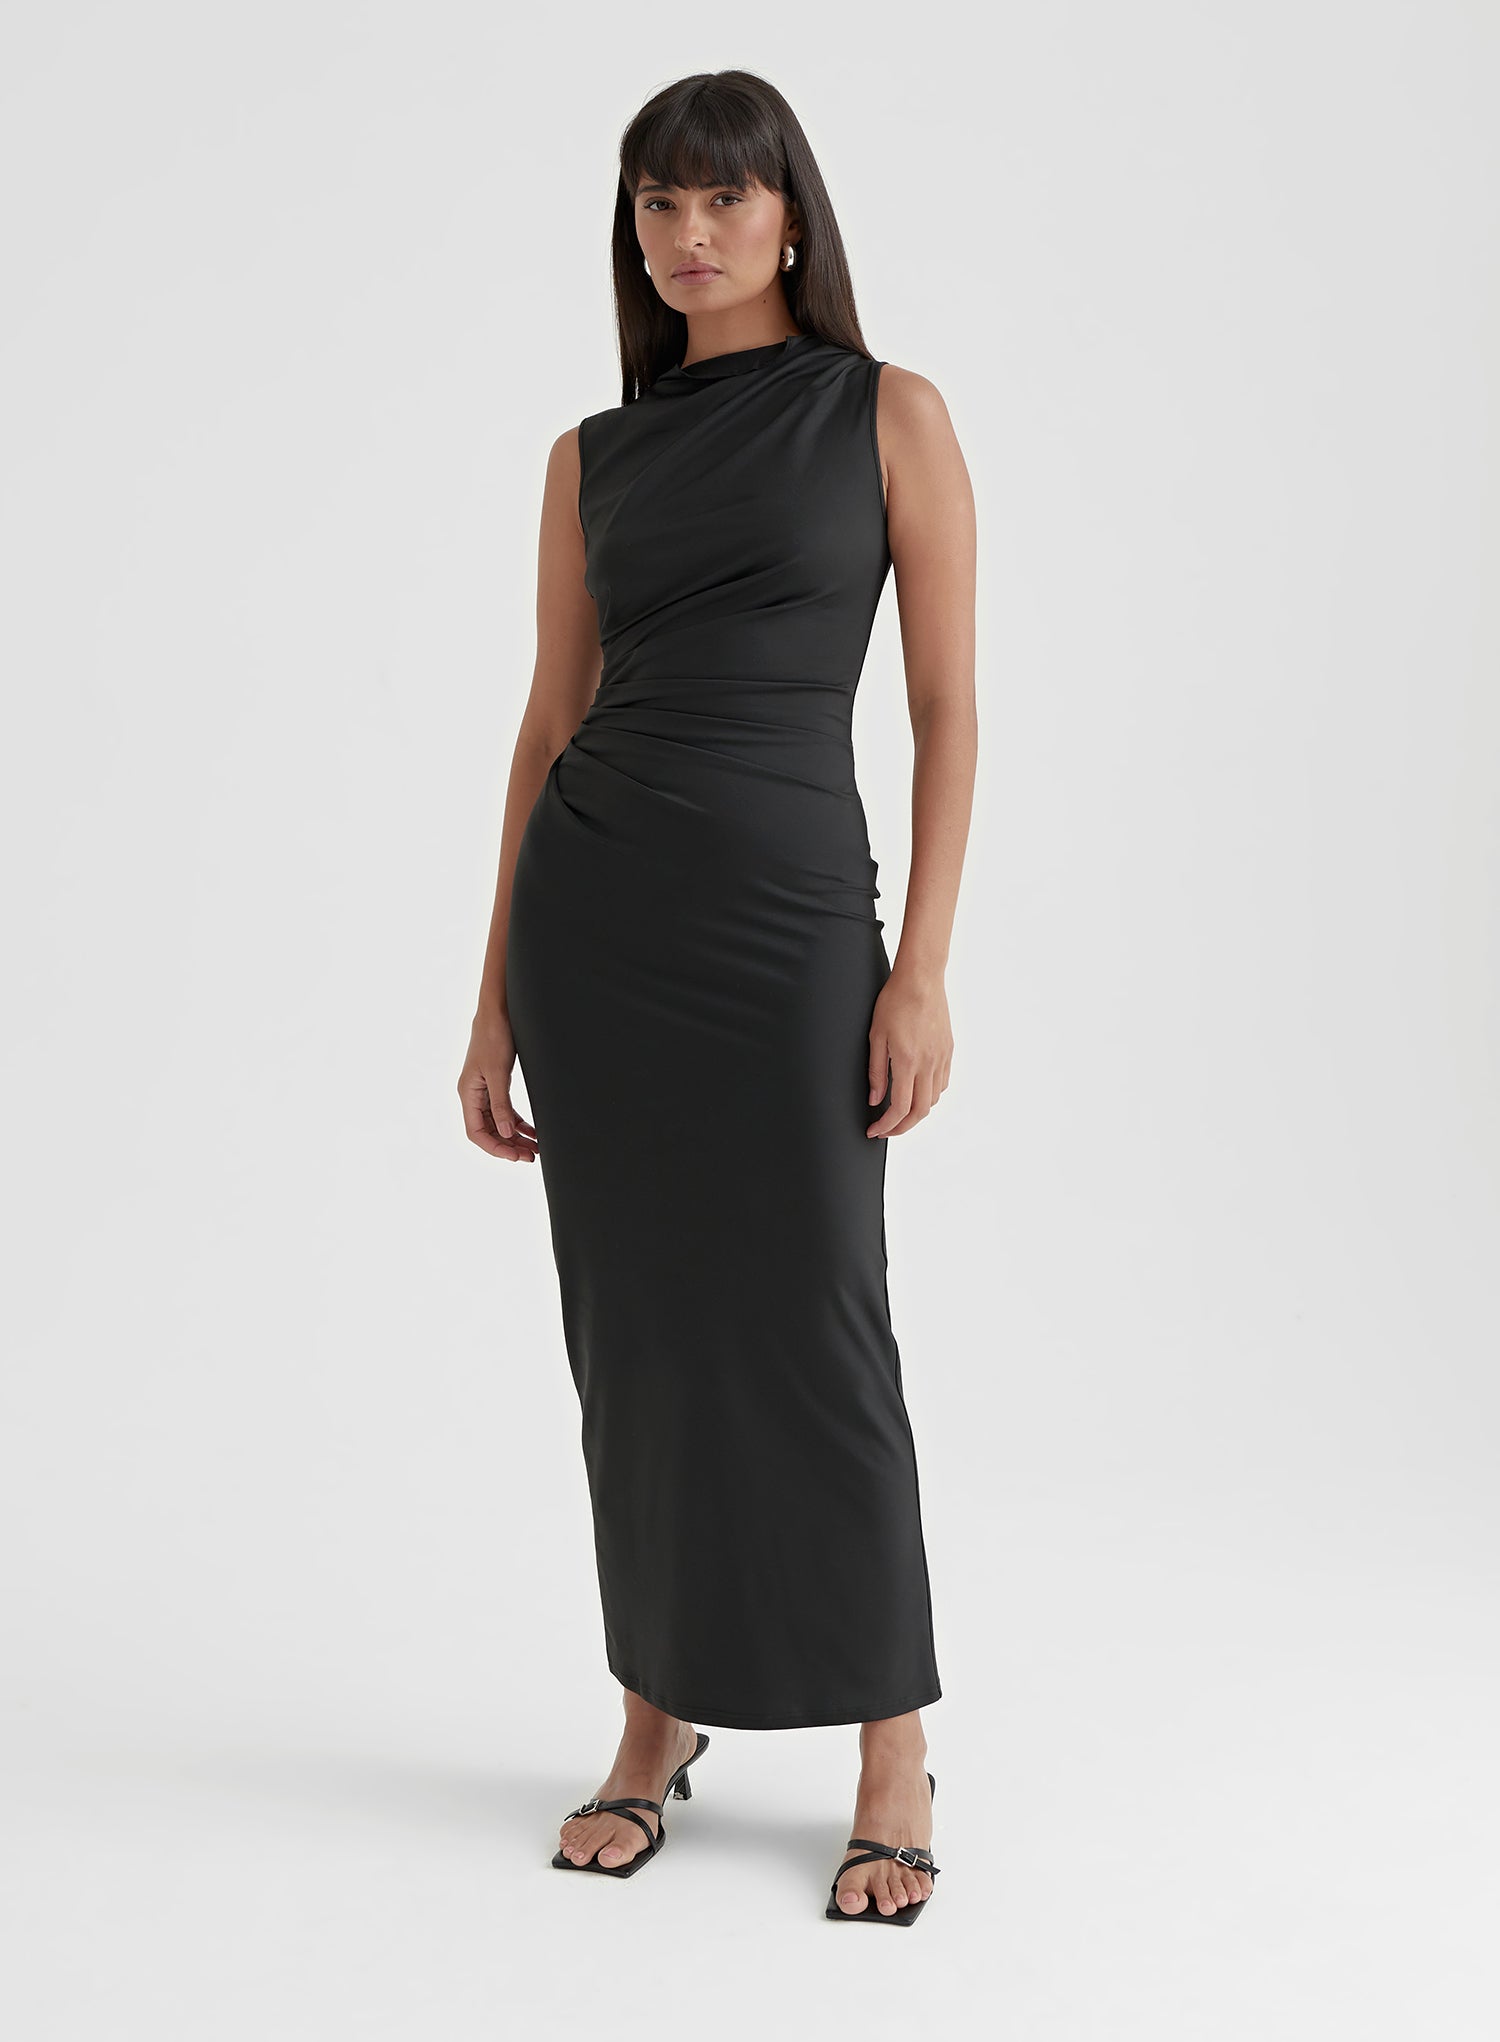 Image of Black Ruched Jersey Midaxi Dress - Tamilda